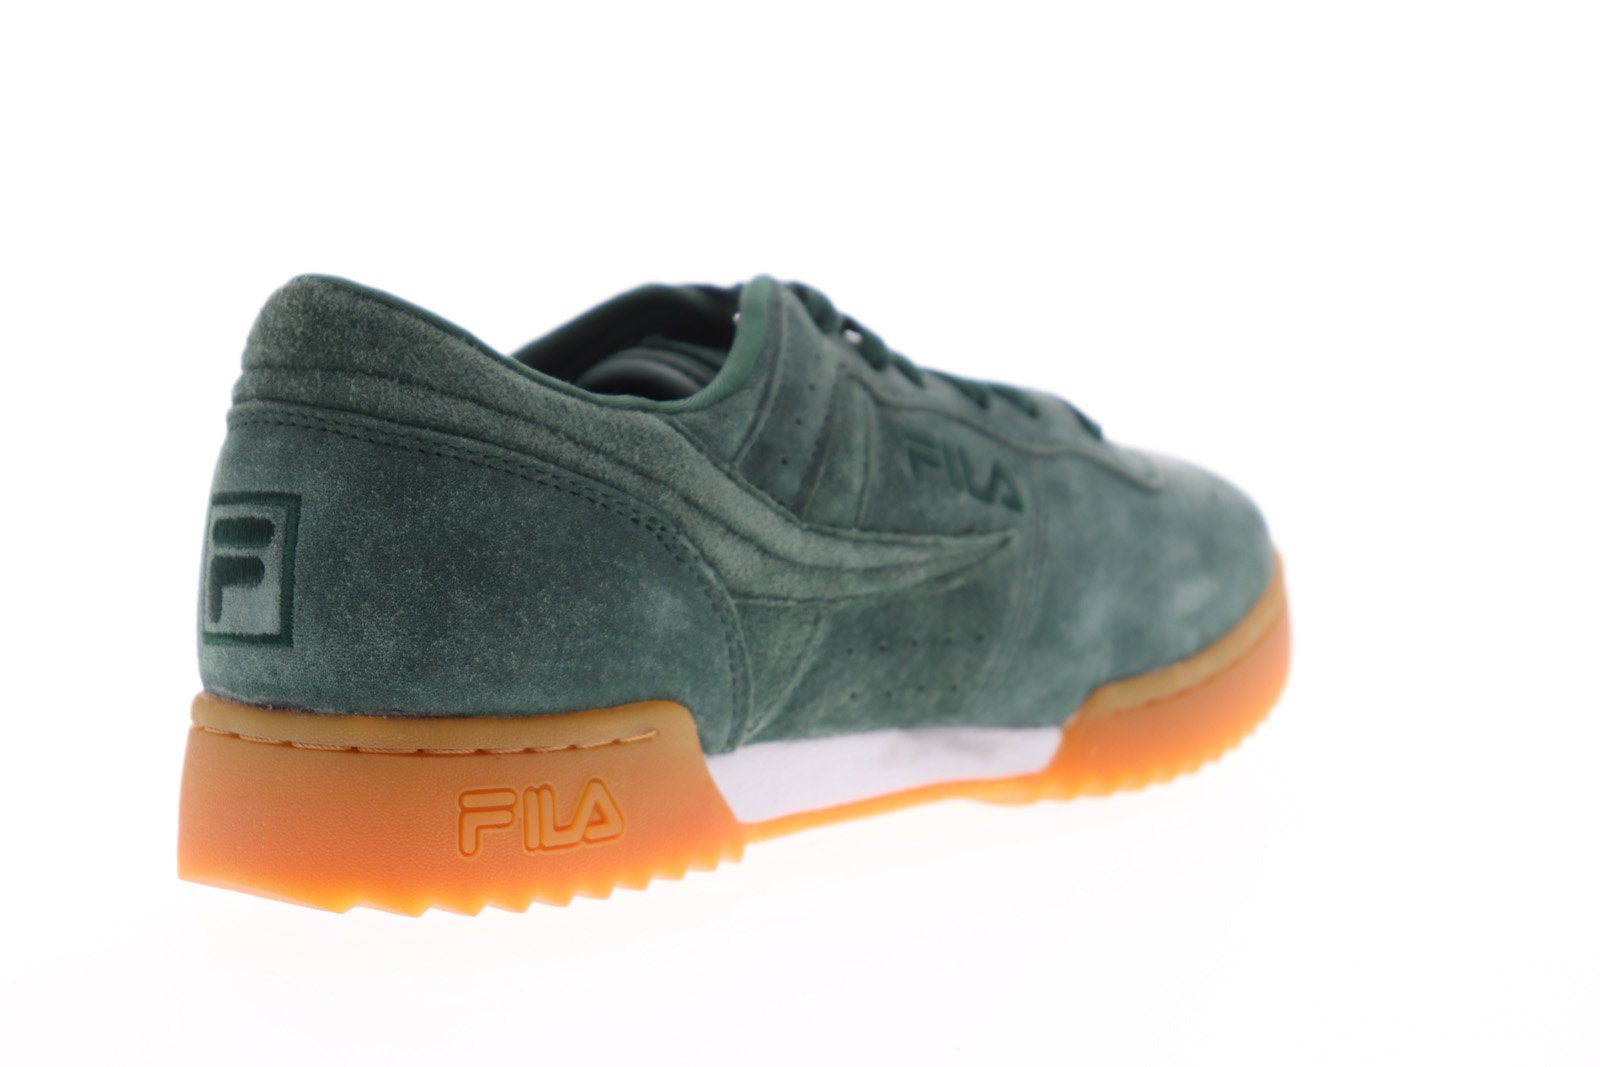 herwinnen vergeven commentaar Fila Original Fitness Ripple Mens Green Suede Casual Lifestyle Sneaker -  Ruze Shoes